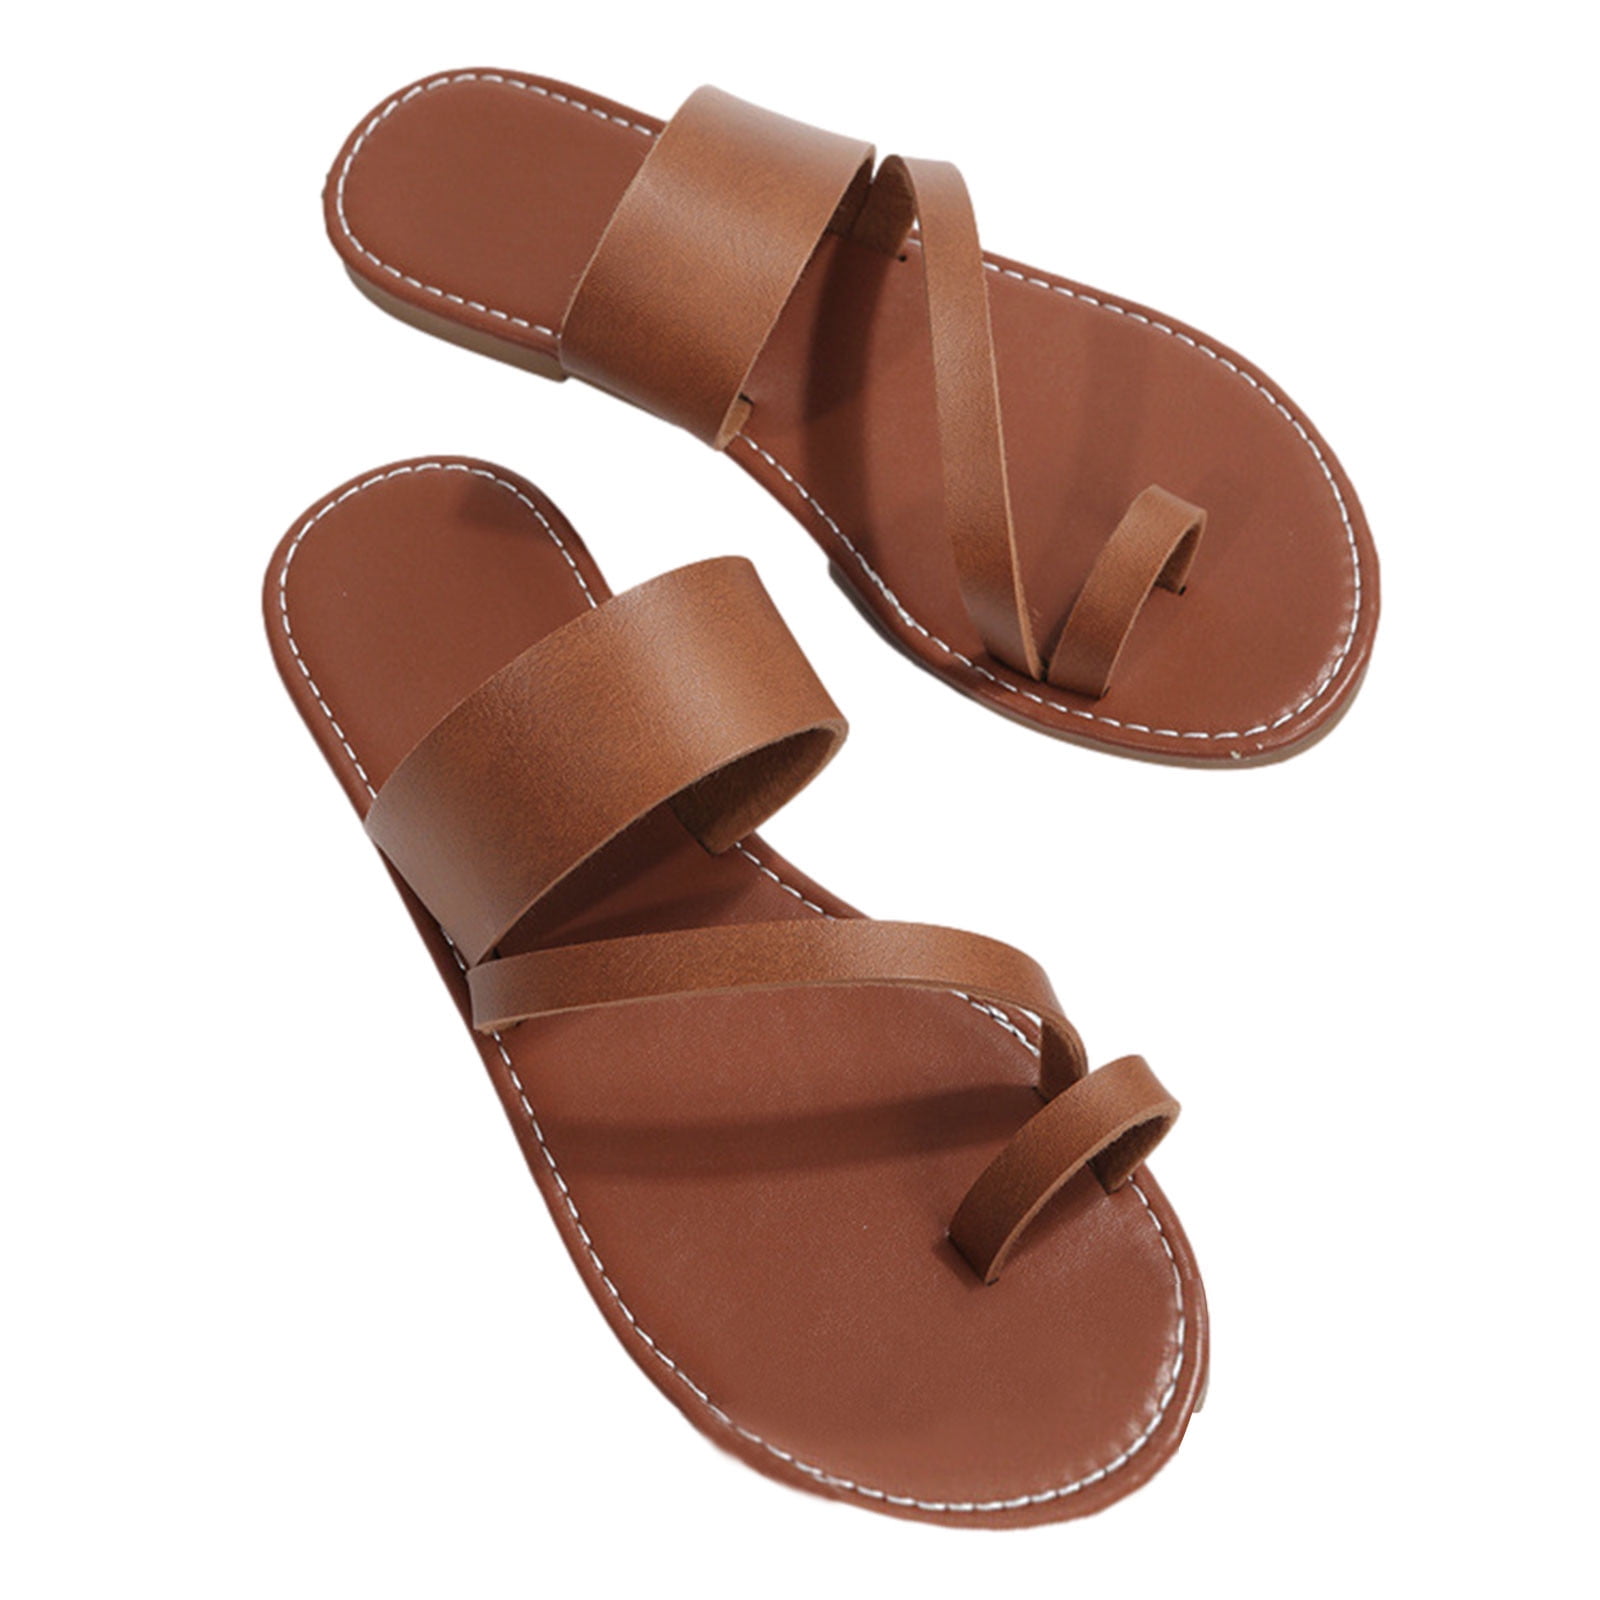 GIRLS Slippers / Summer women slippers sandals/ New Designs / Hand Made